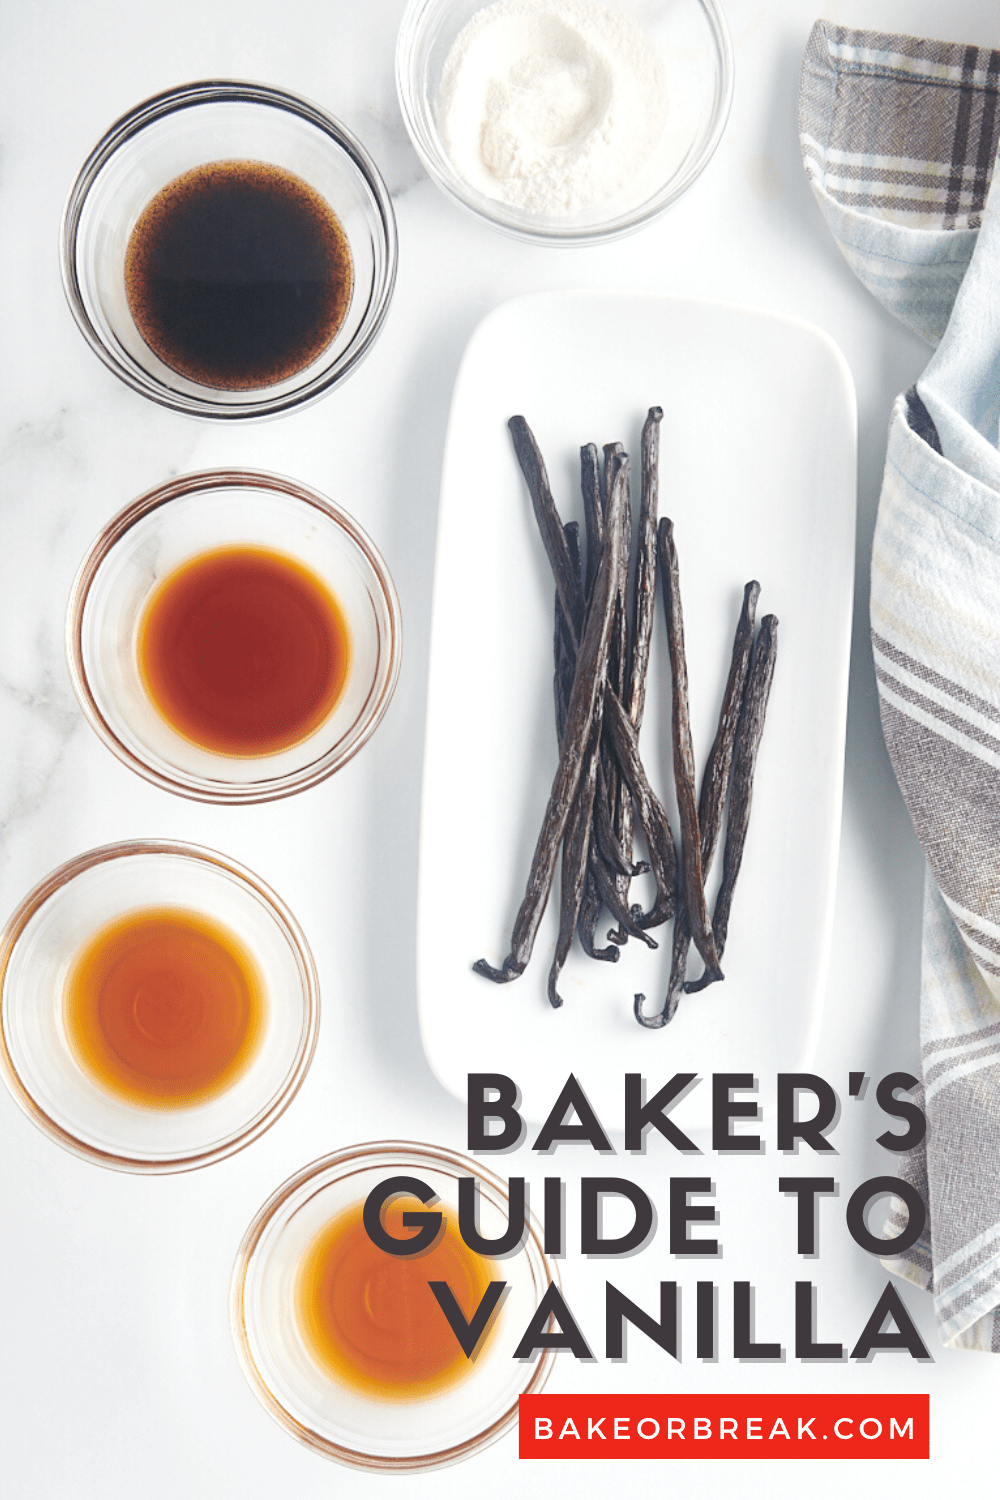 Baker's Guide to Vanilla bakeorbreak.com